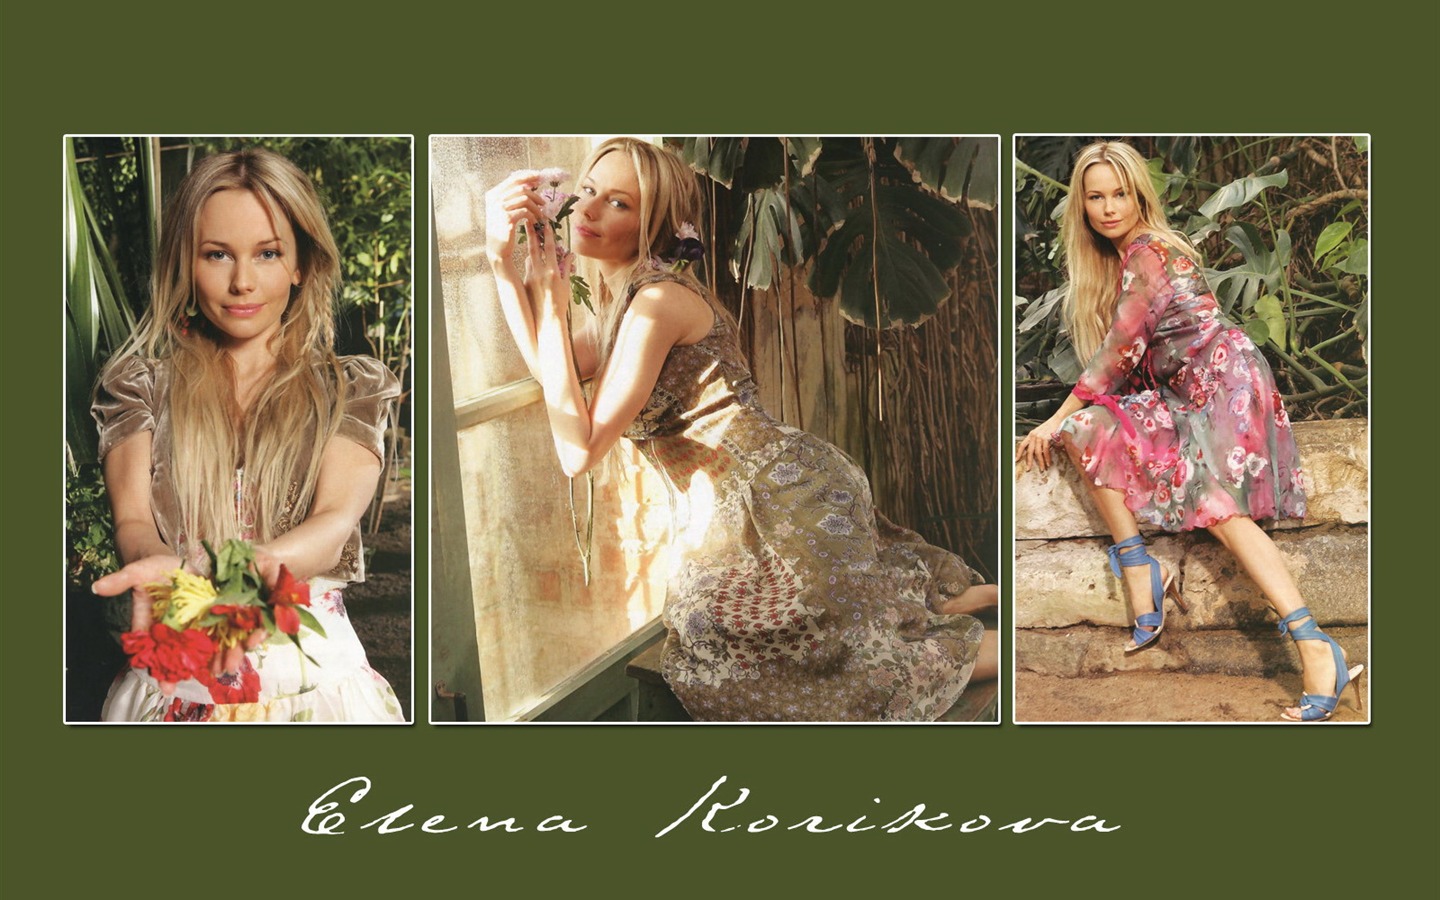 Elena Korikova #011 - 1440x900 Wallpapers Pictures Photos Images